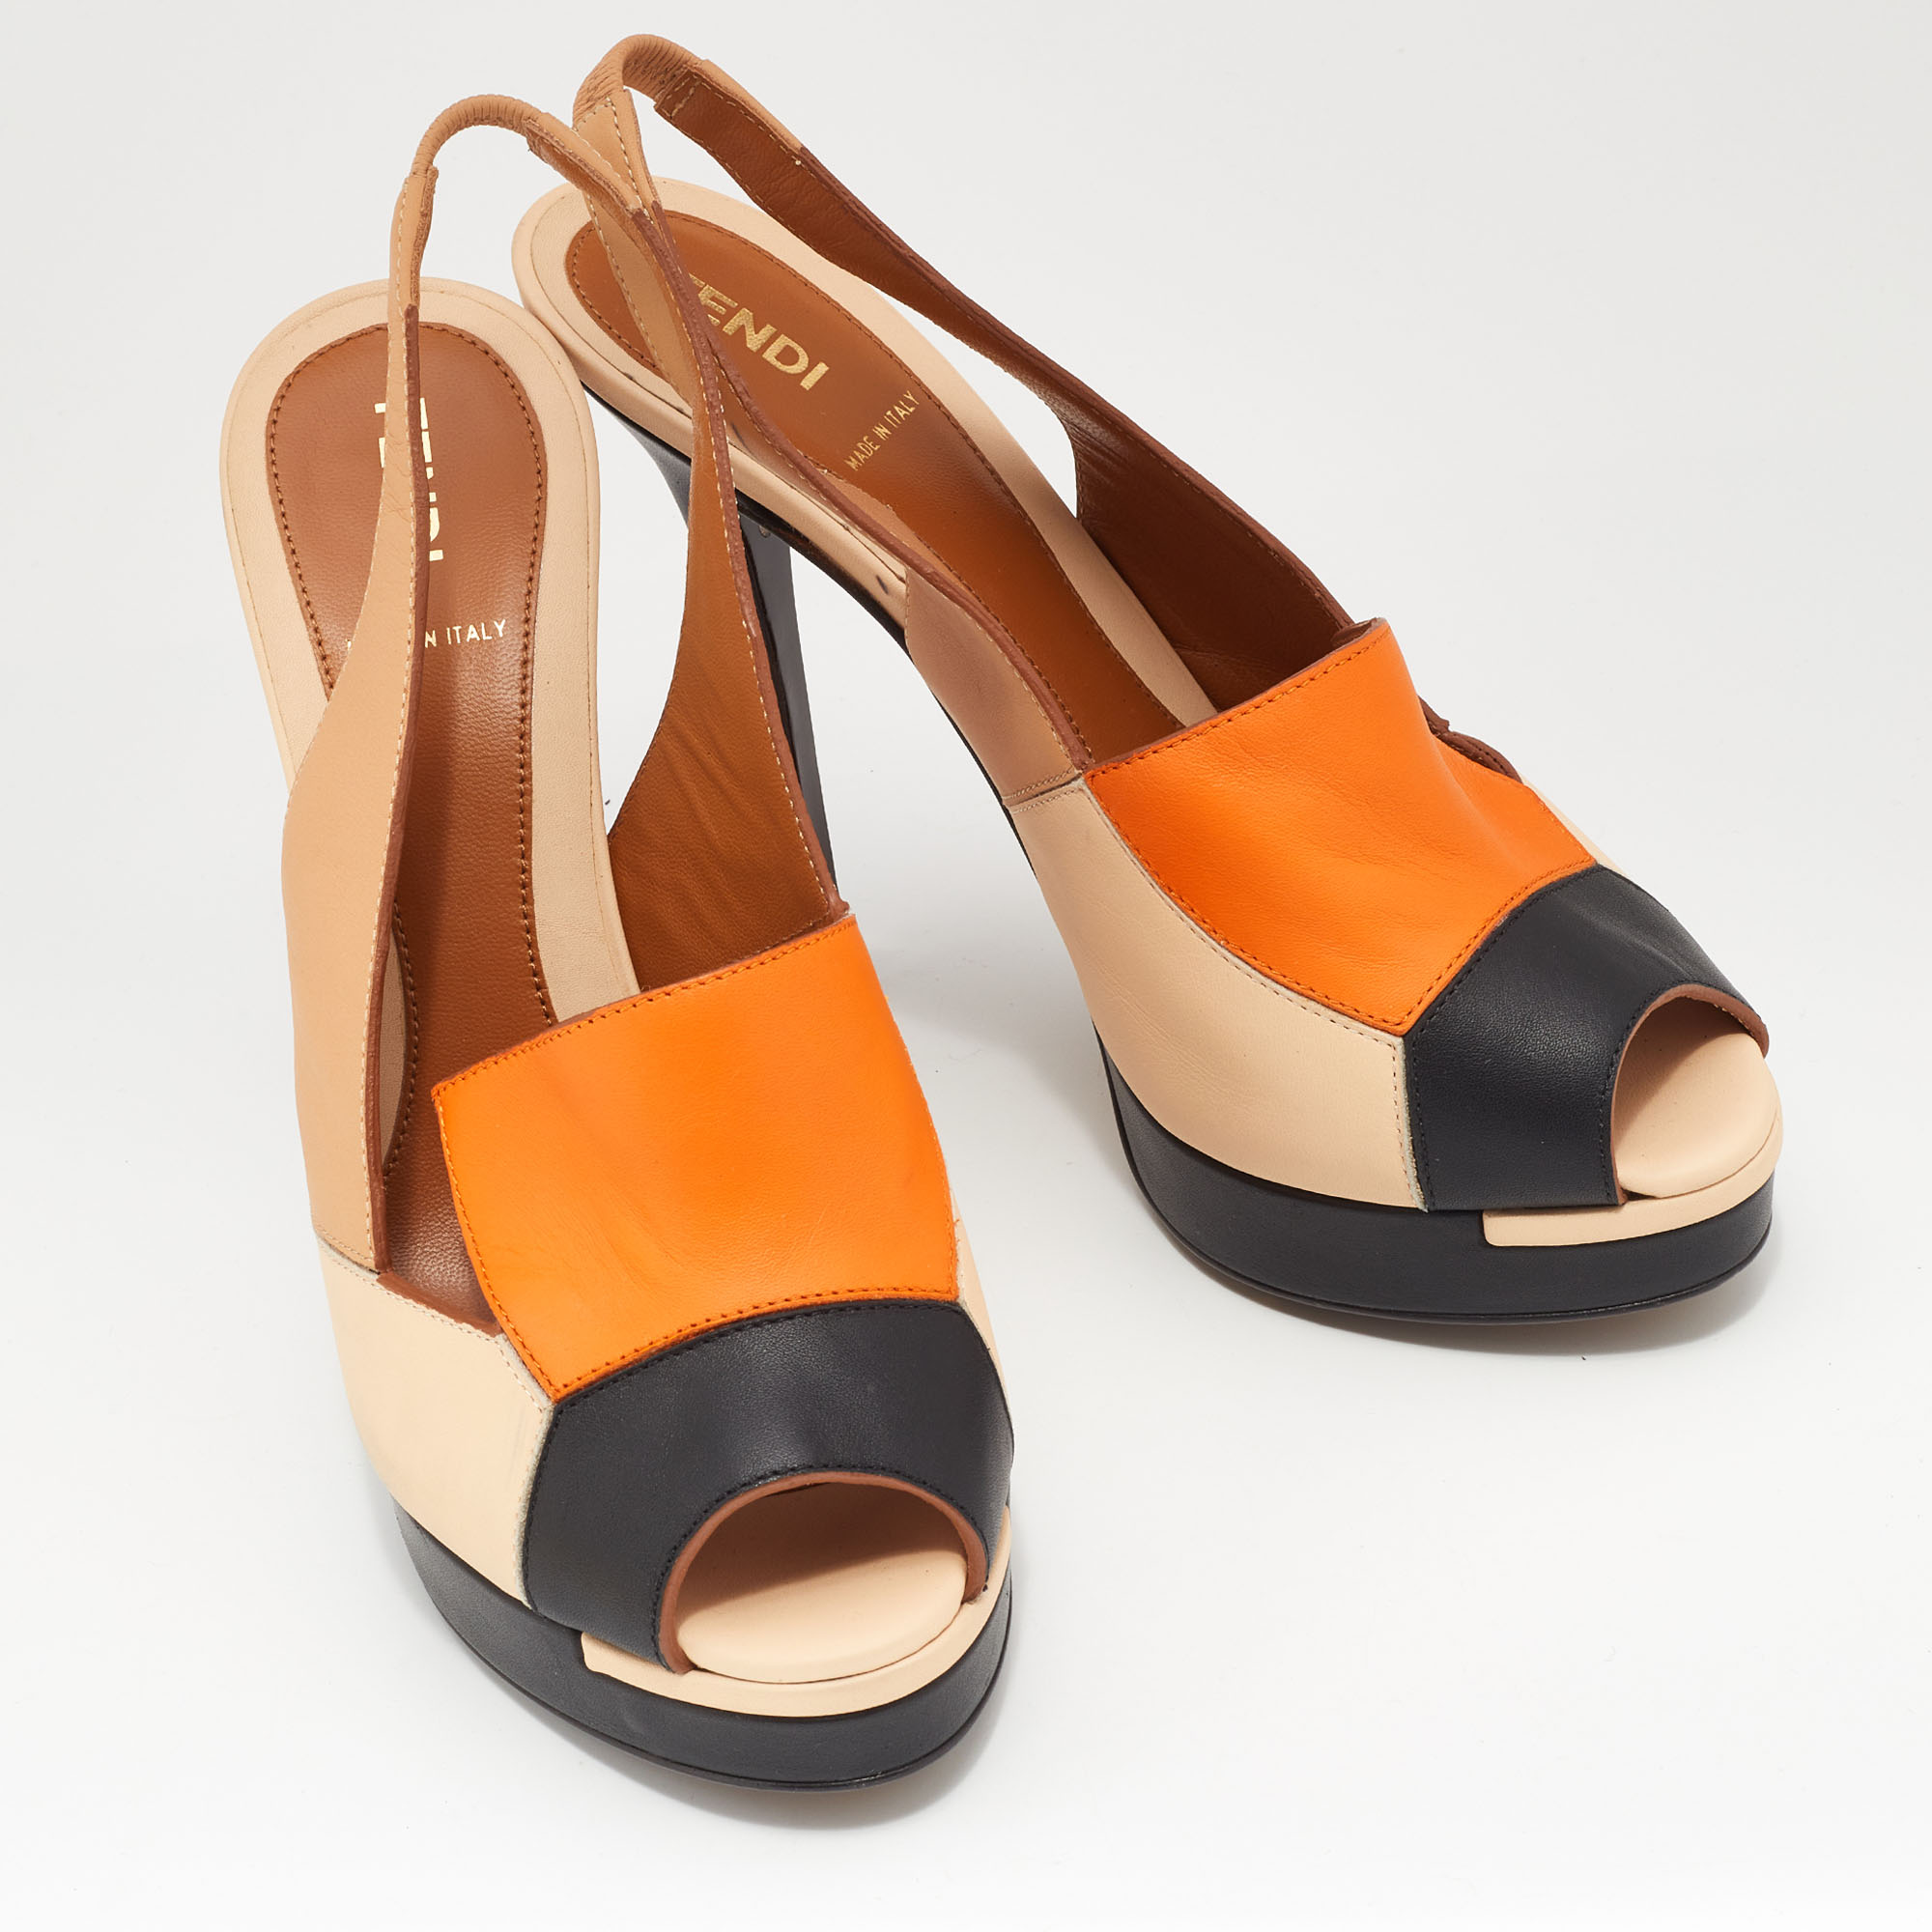 Fendi Multicolor Leather Color Block Peep Toe Slingback Sandals Size 37